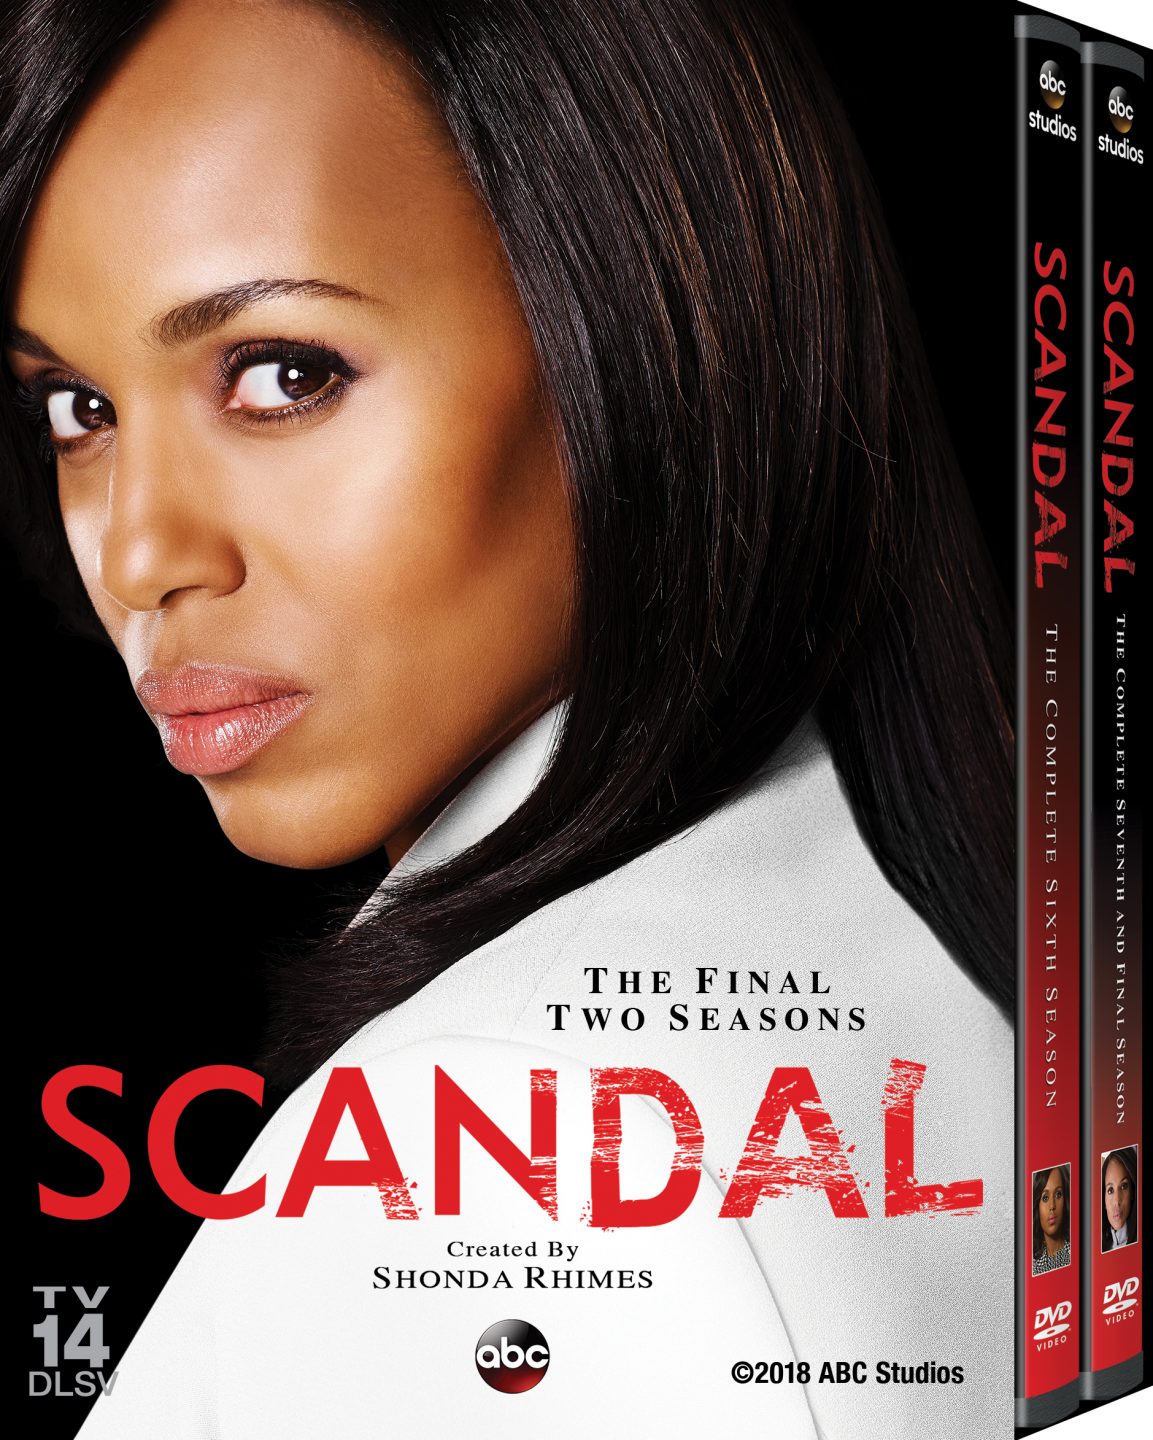 Scandal Season 6 And 7 DVD cover (Walt Disney Studios Home Entertainment)